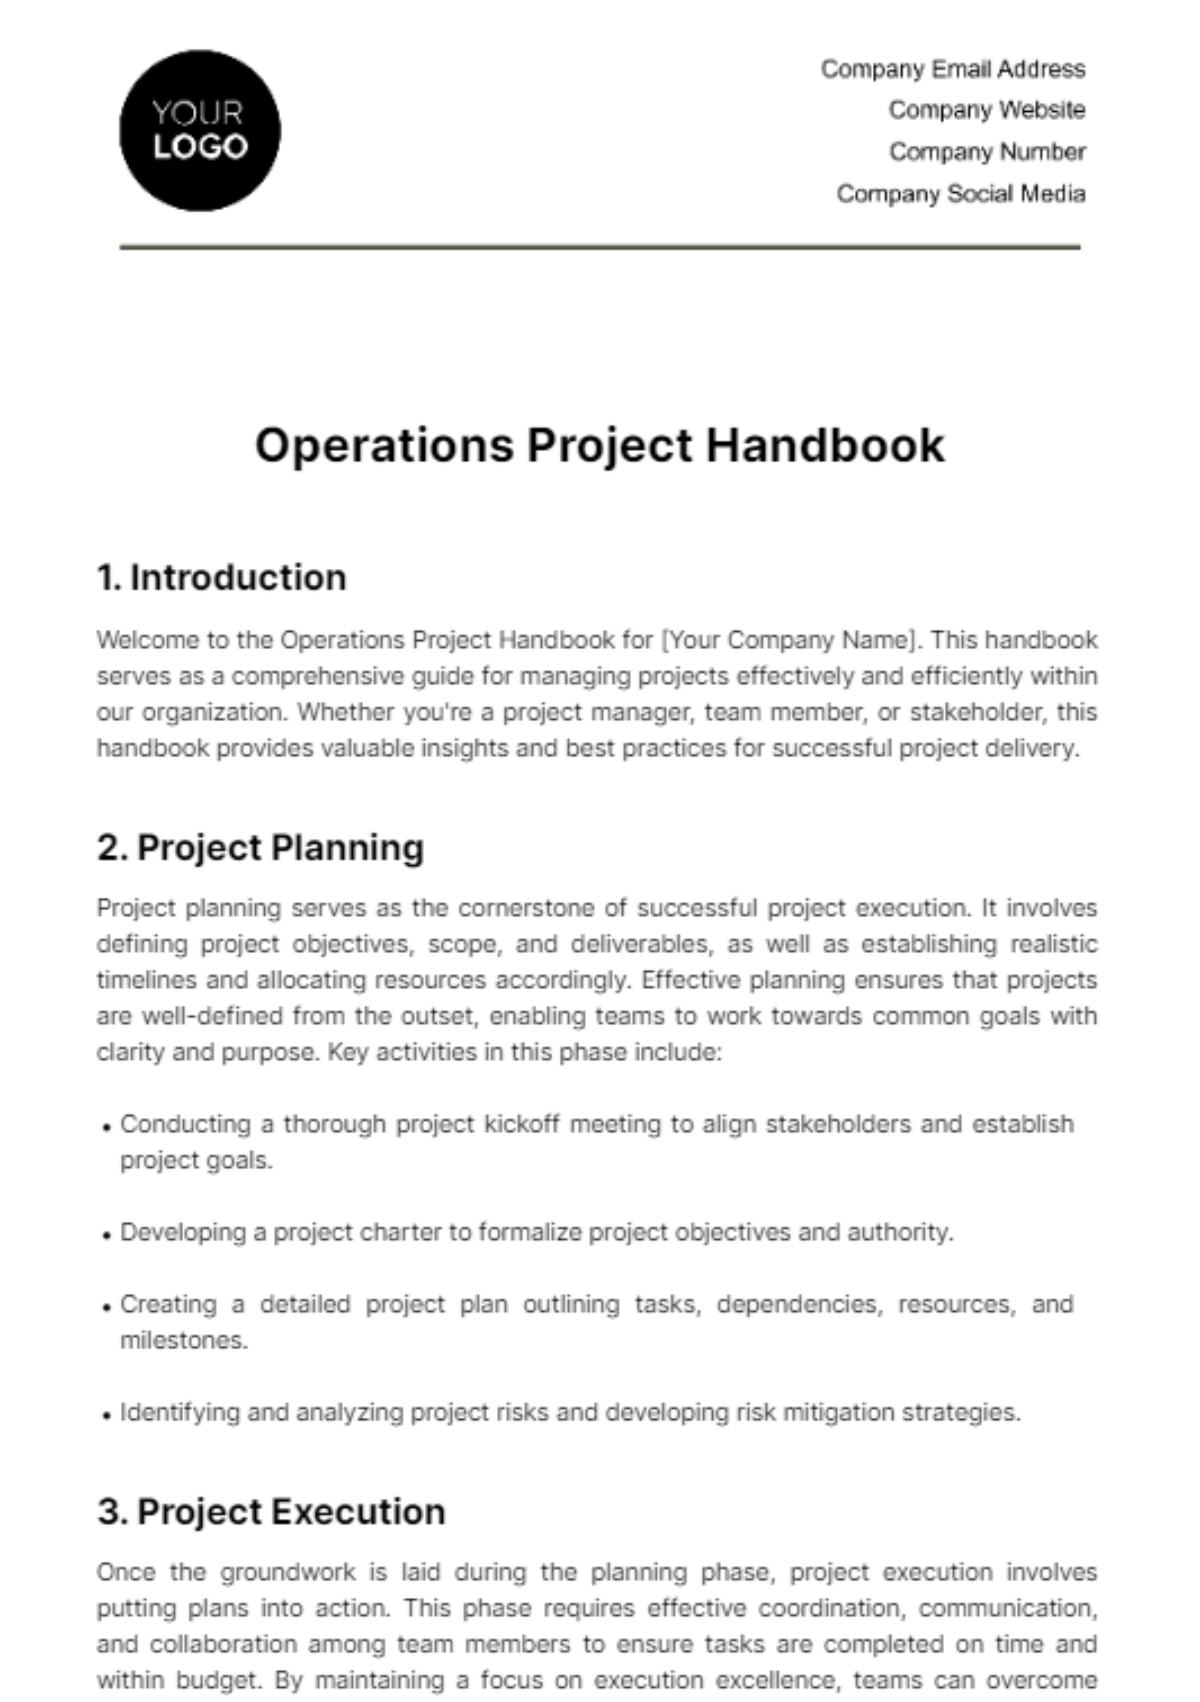 Operations Project Handbook Template